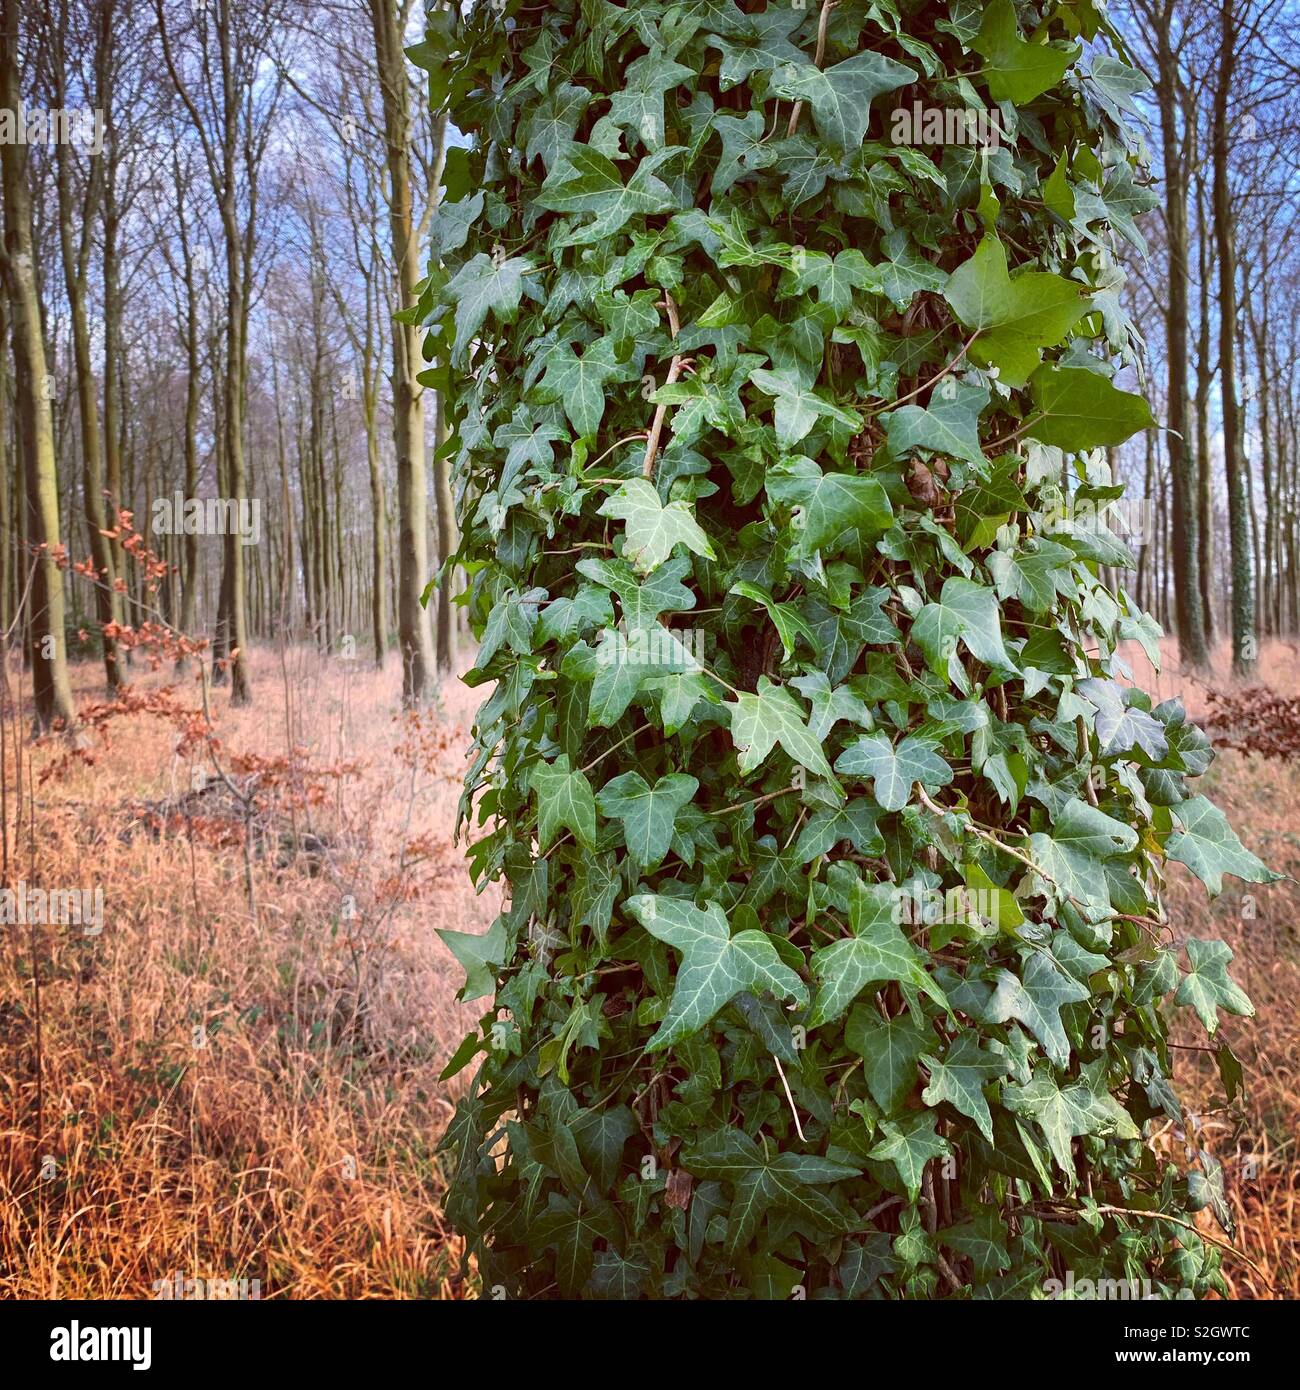 Ivy clad tree Stock Photo